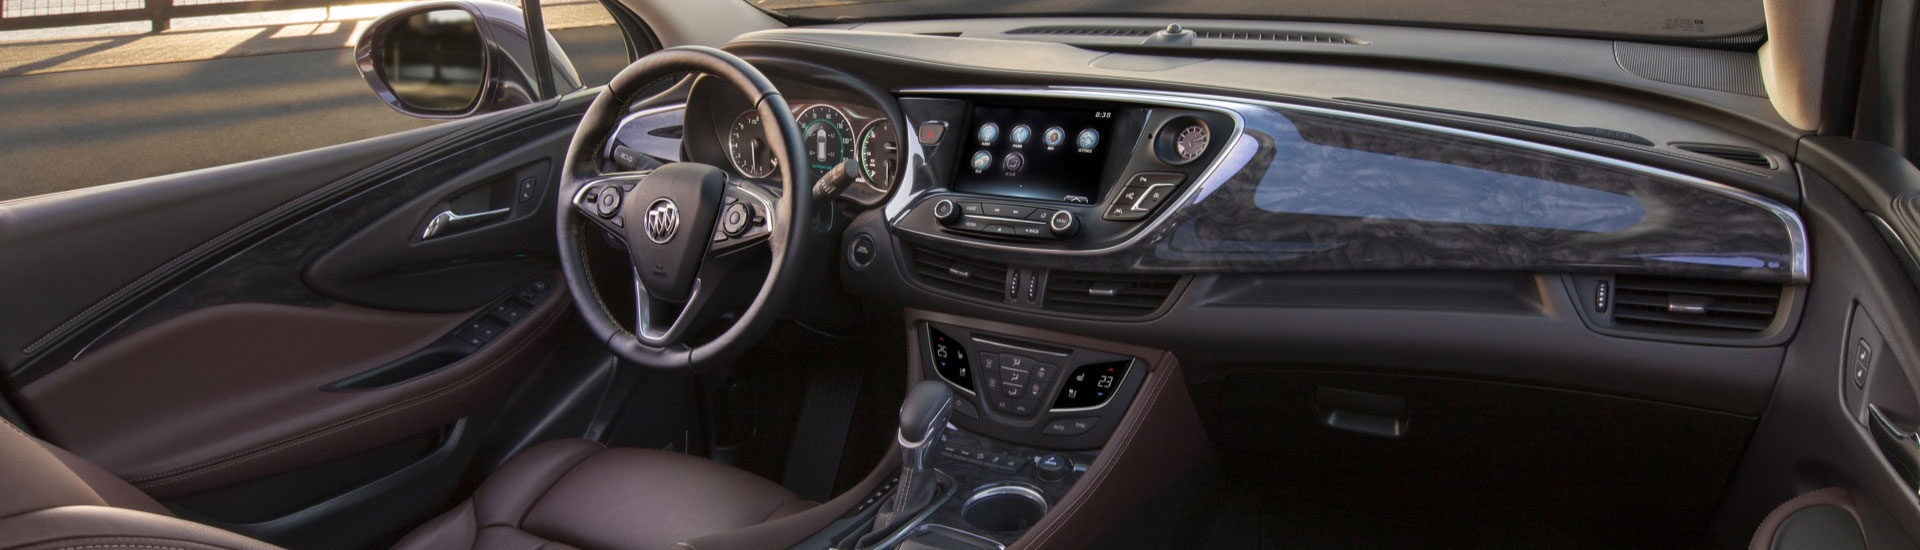 2021 Buick Envision Custom Dash Kits